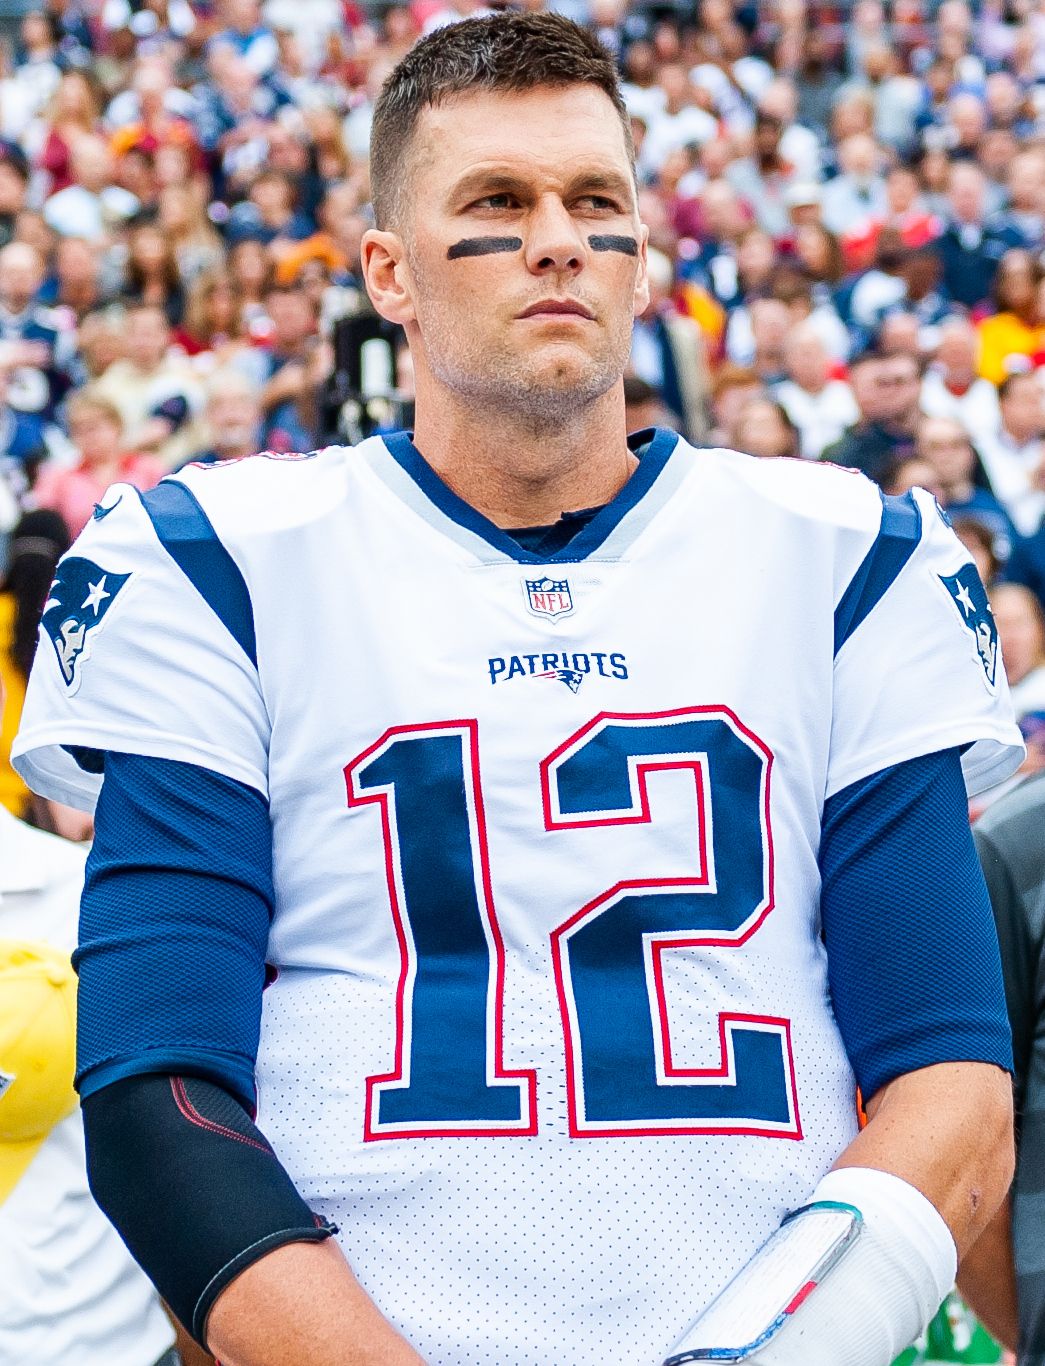 Father of Patriots' QB Tom Brady rips NFL Commissioner Goodell